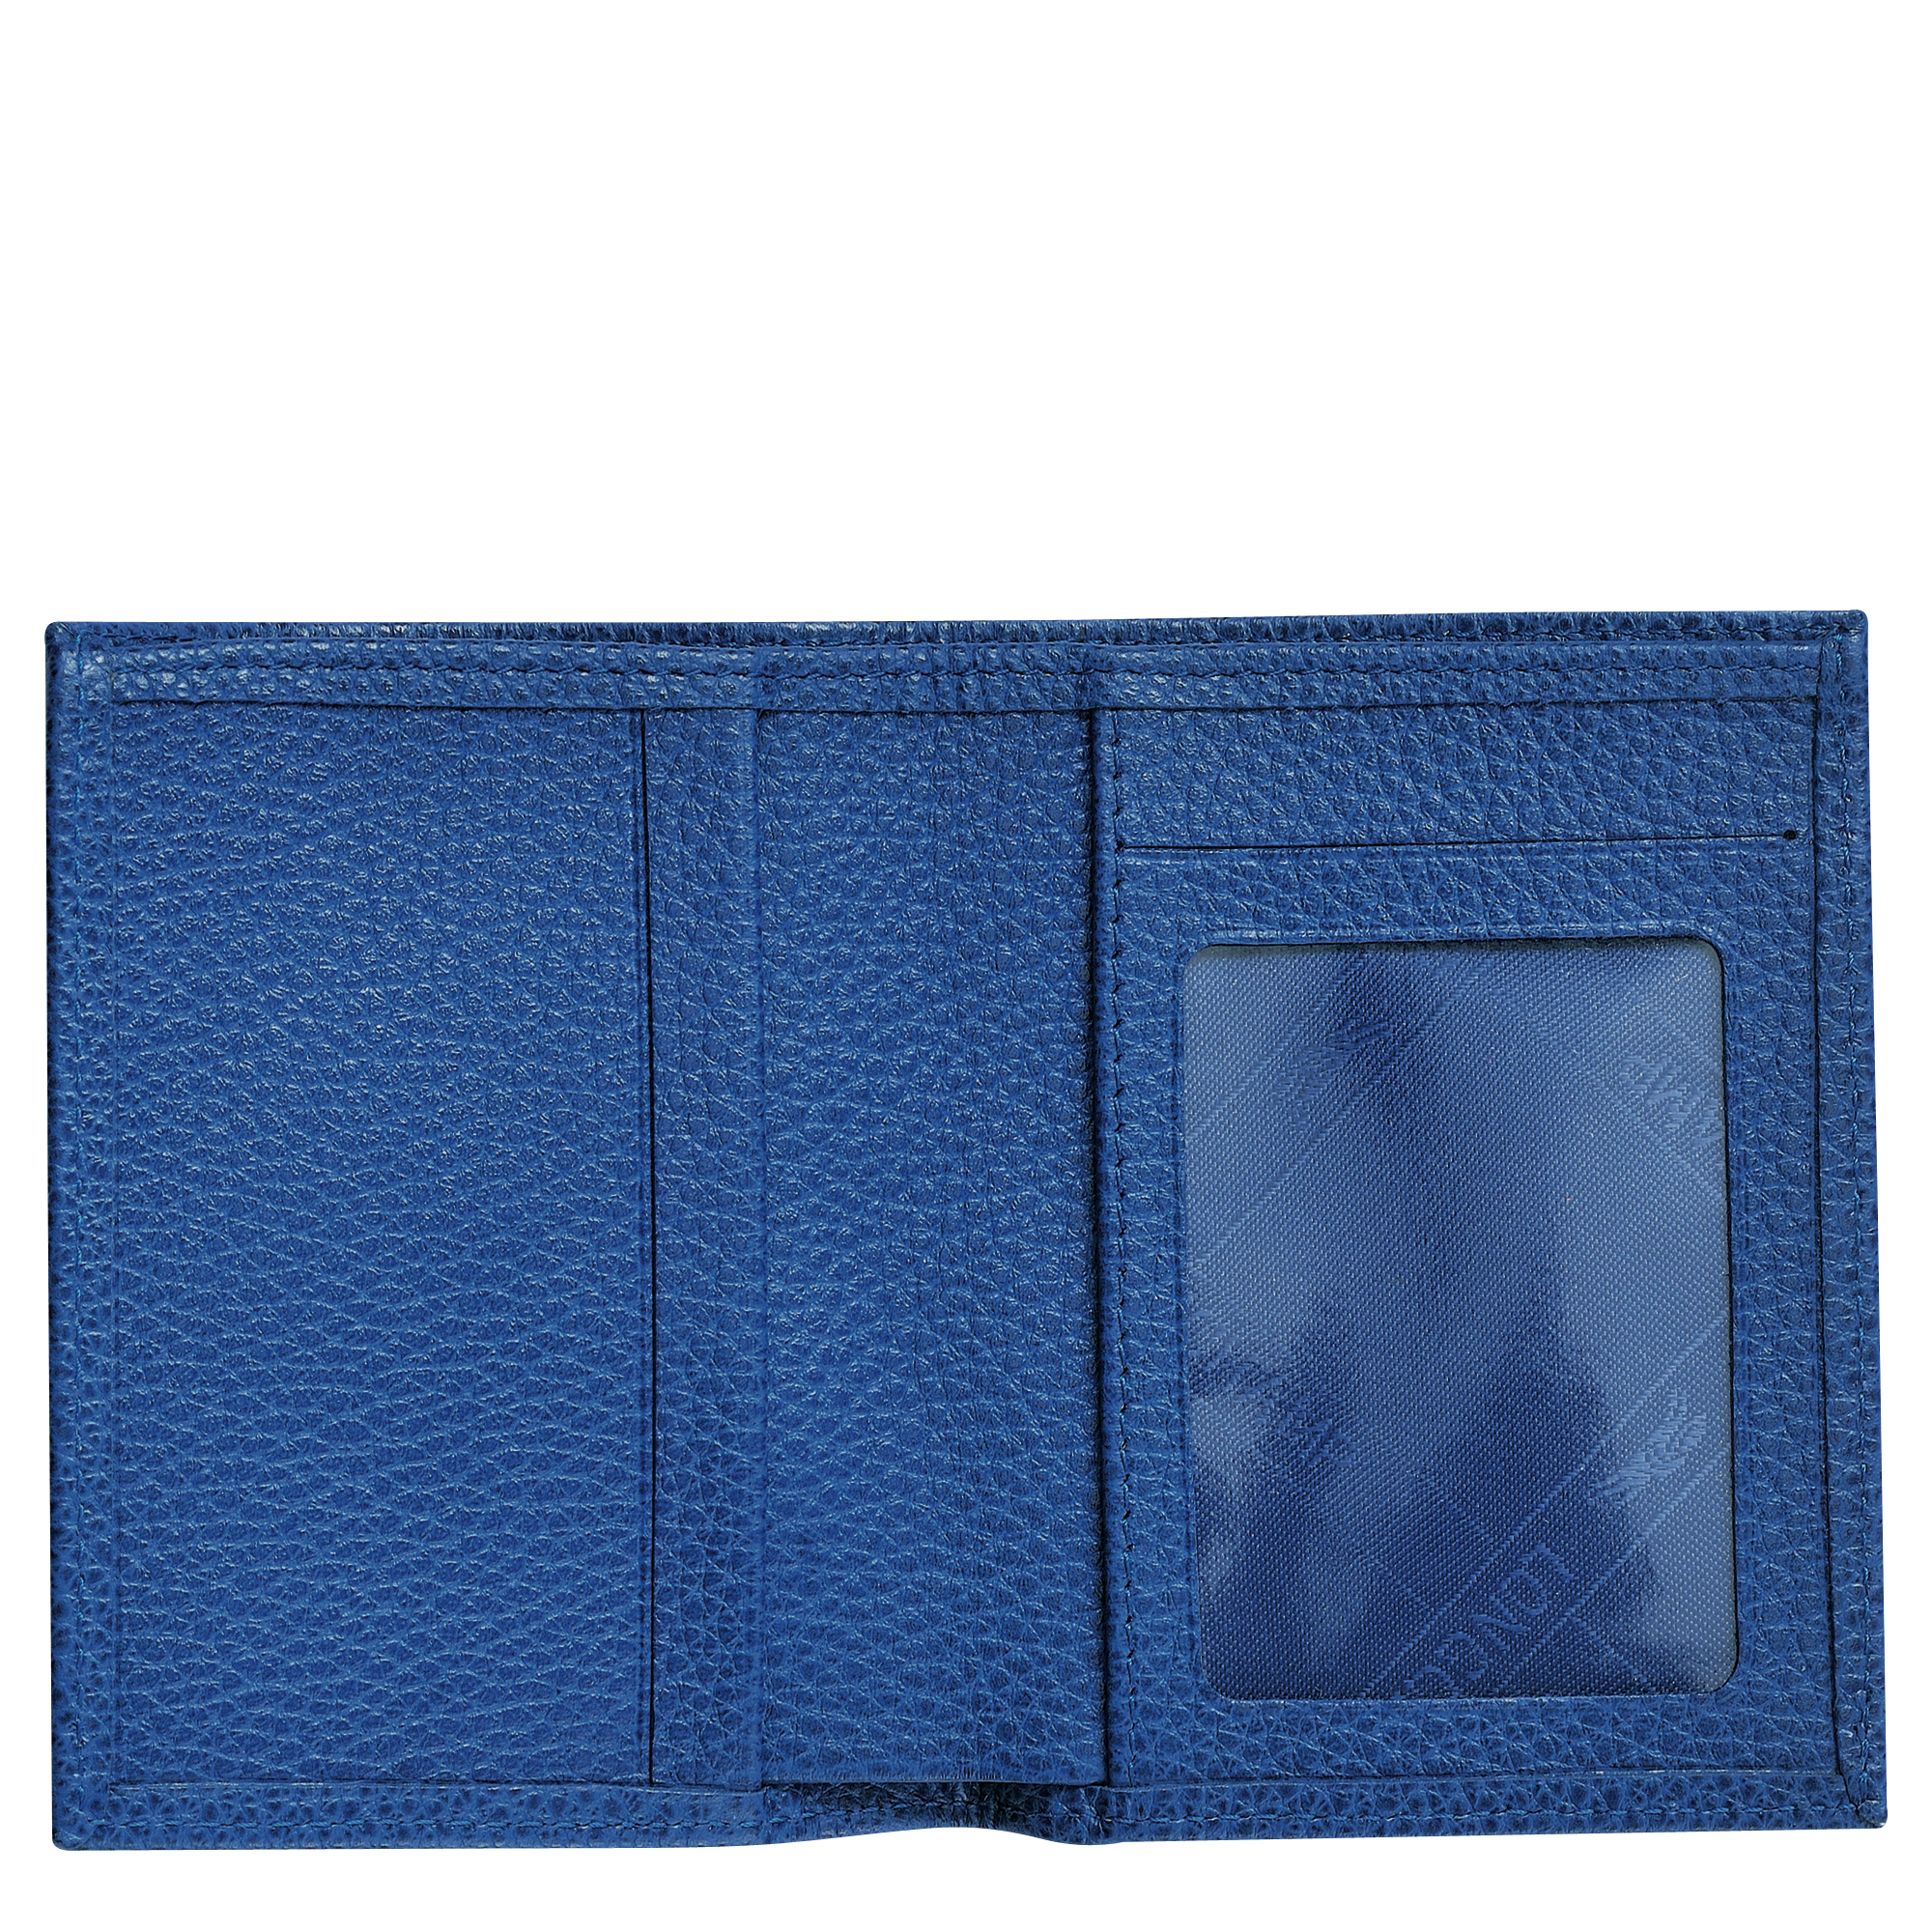 longchamp card wallet